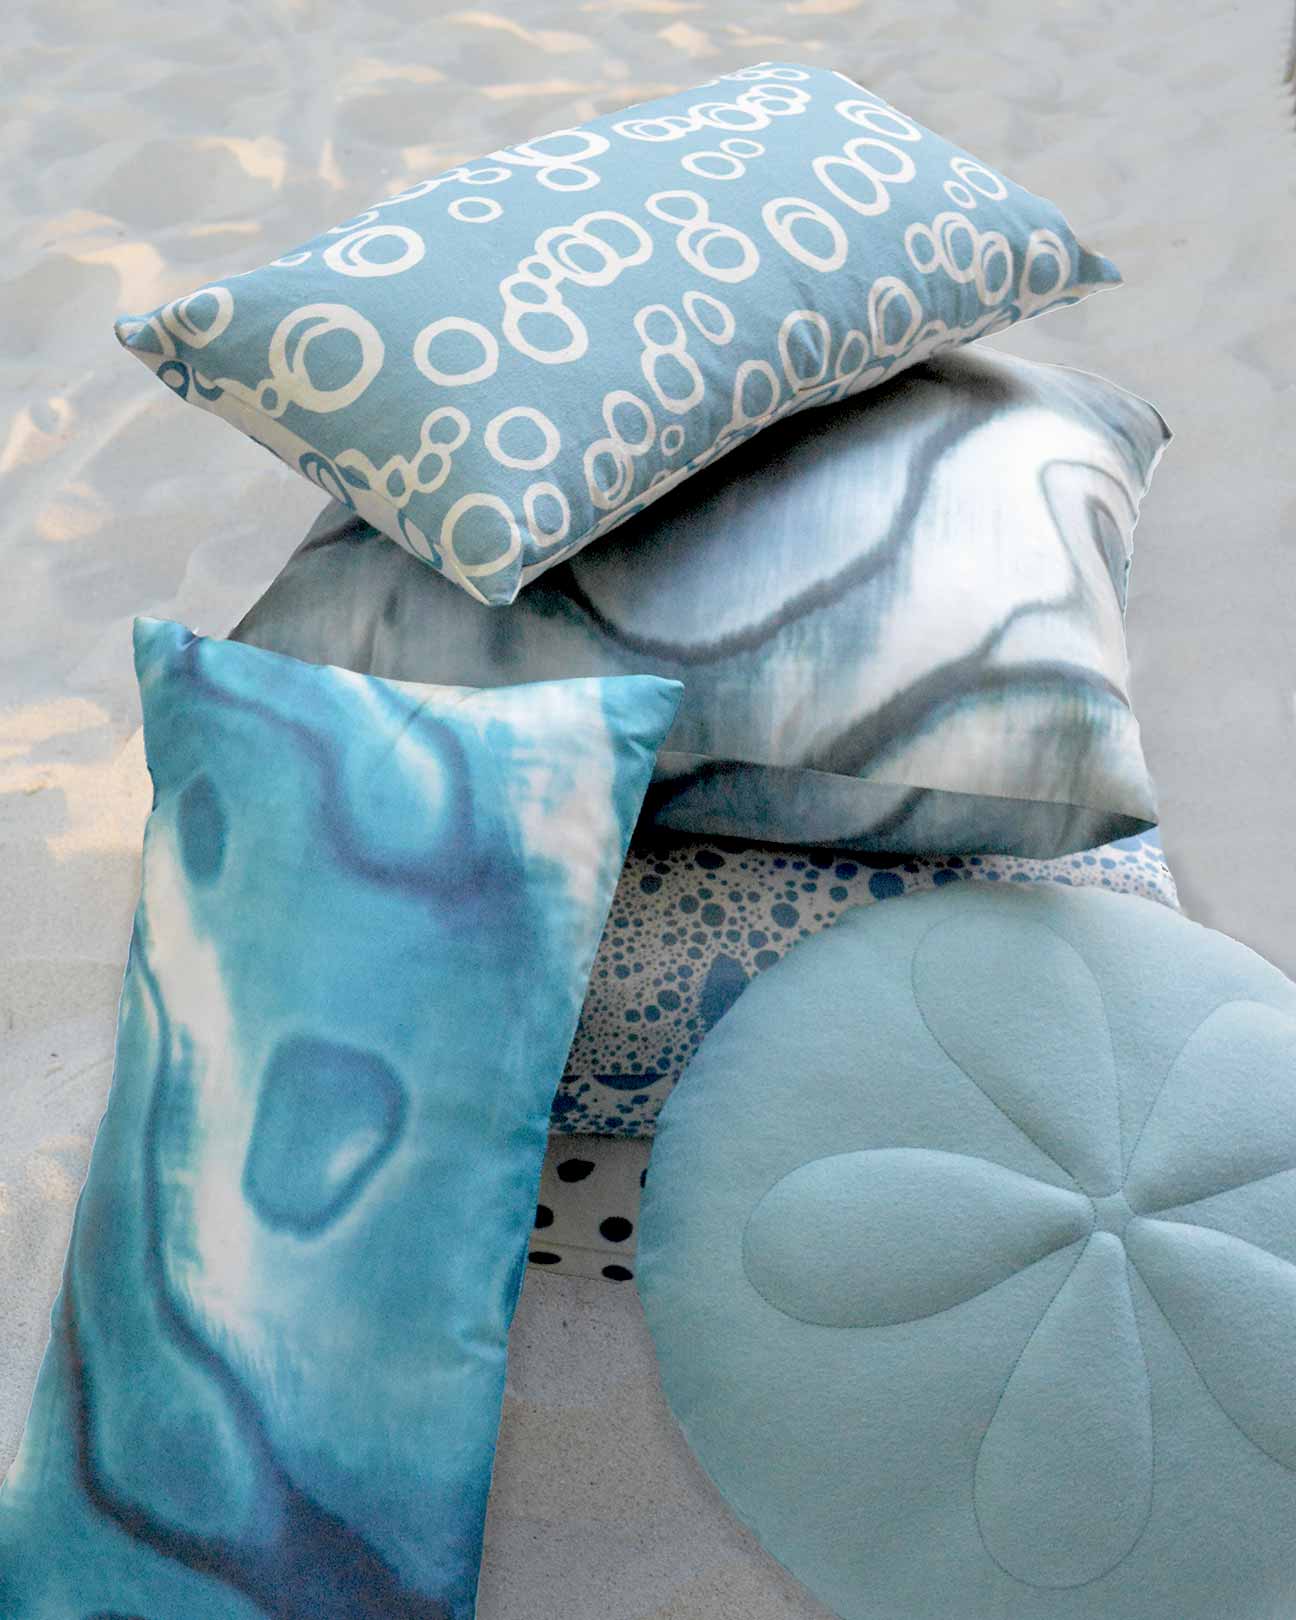 Sea Foam Organic Pillow Cover